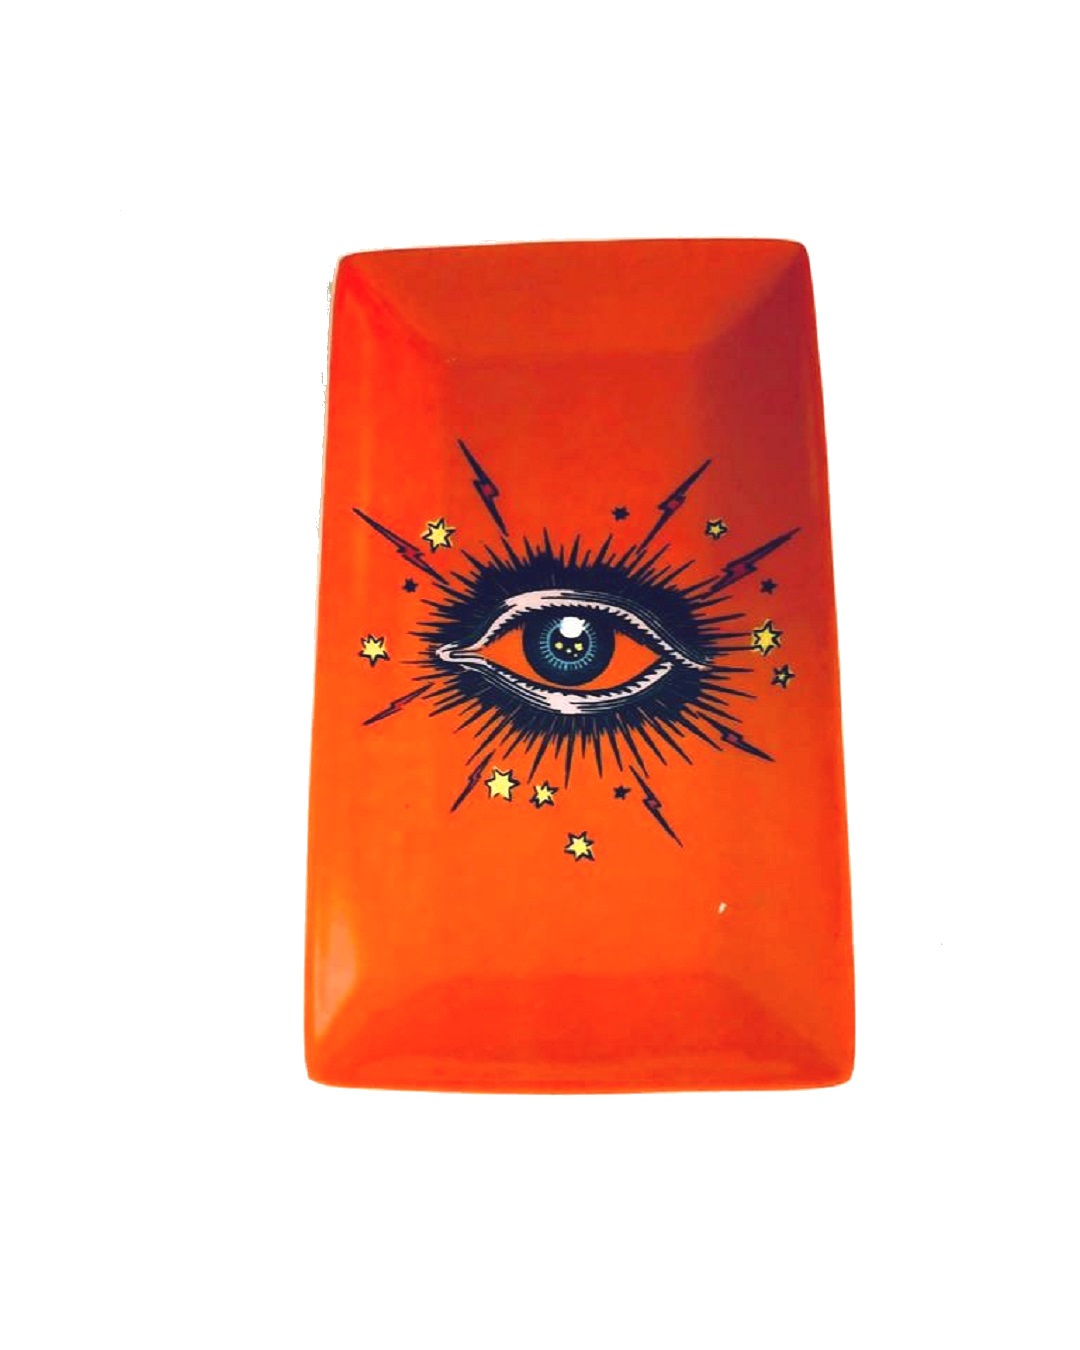 Fornasetti replica orange eye rectangle plate